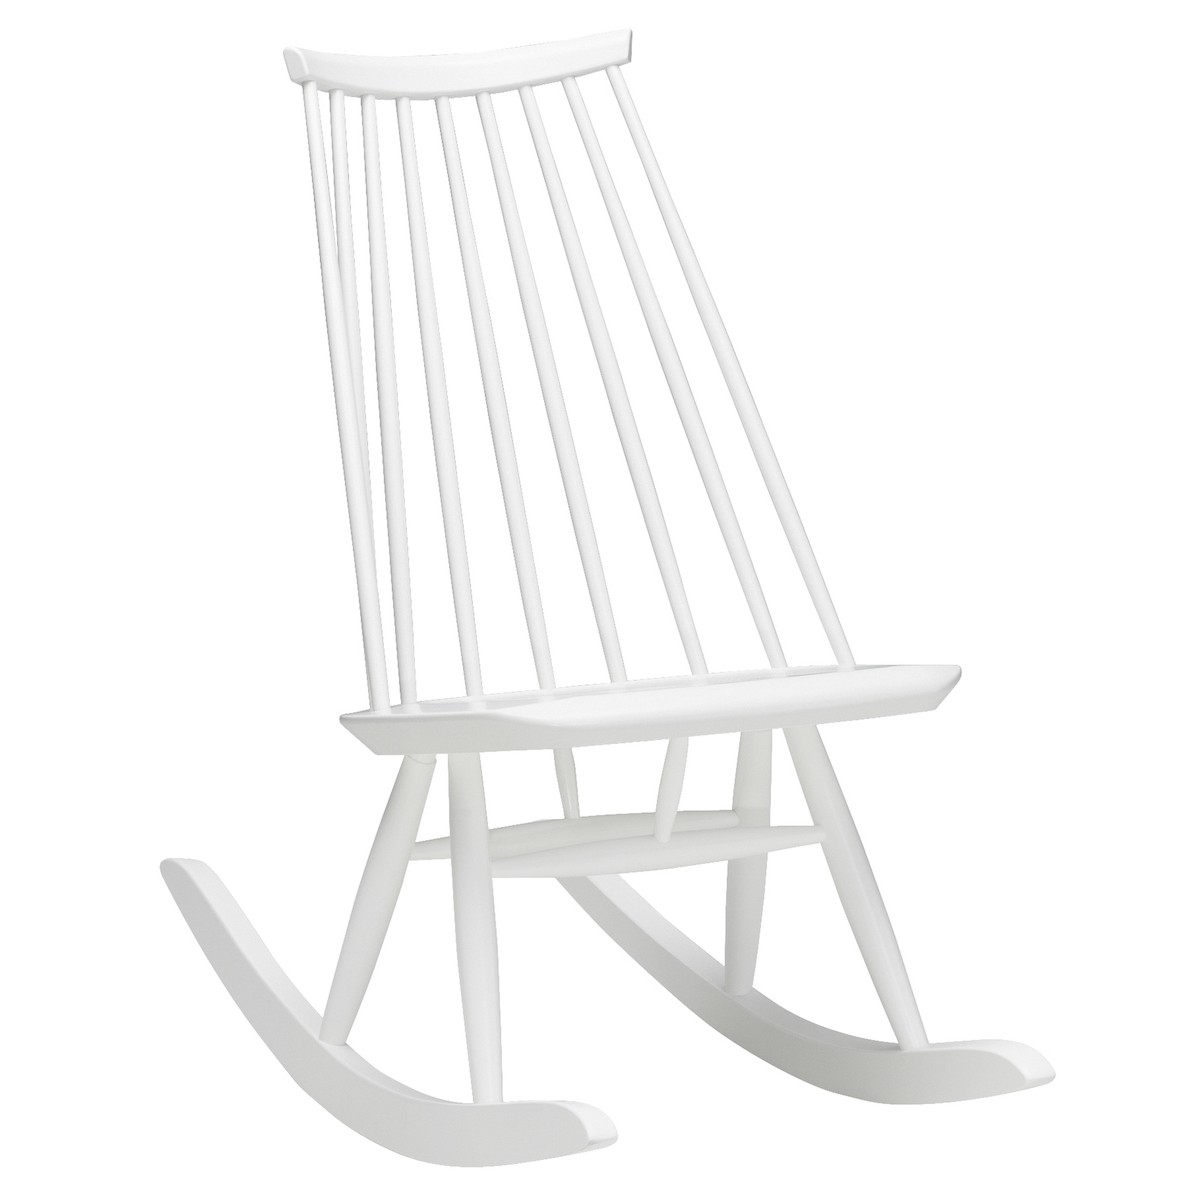 blanc - Mademoiselle rocking chair